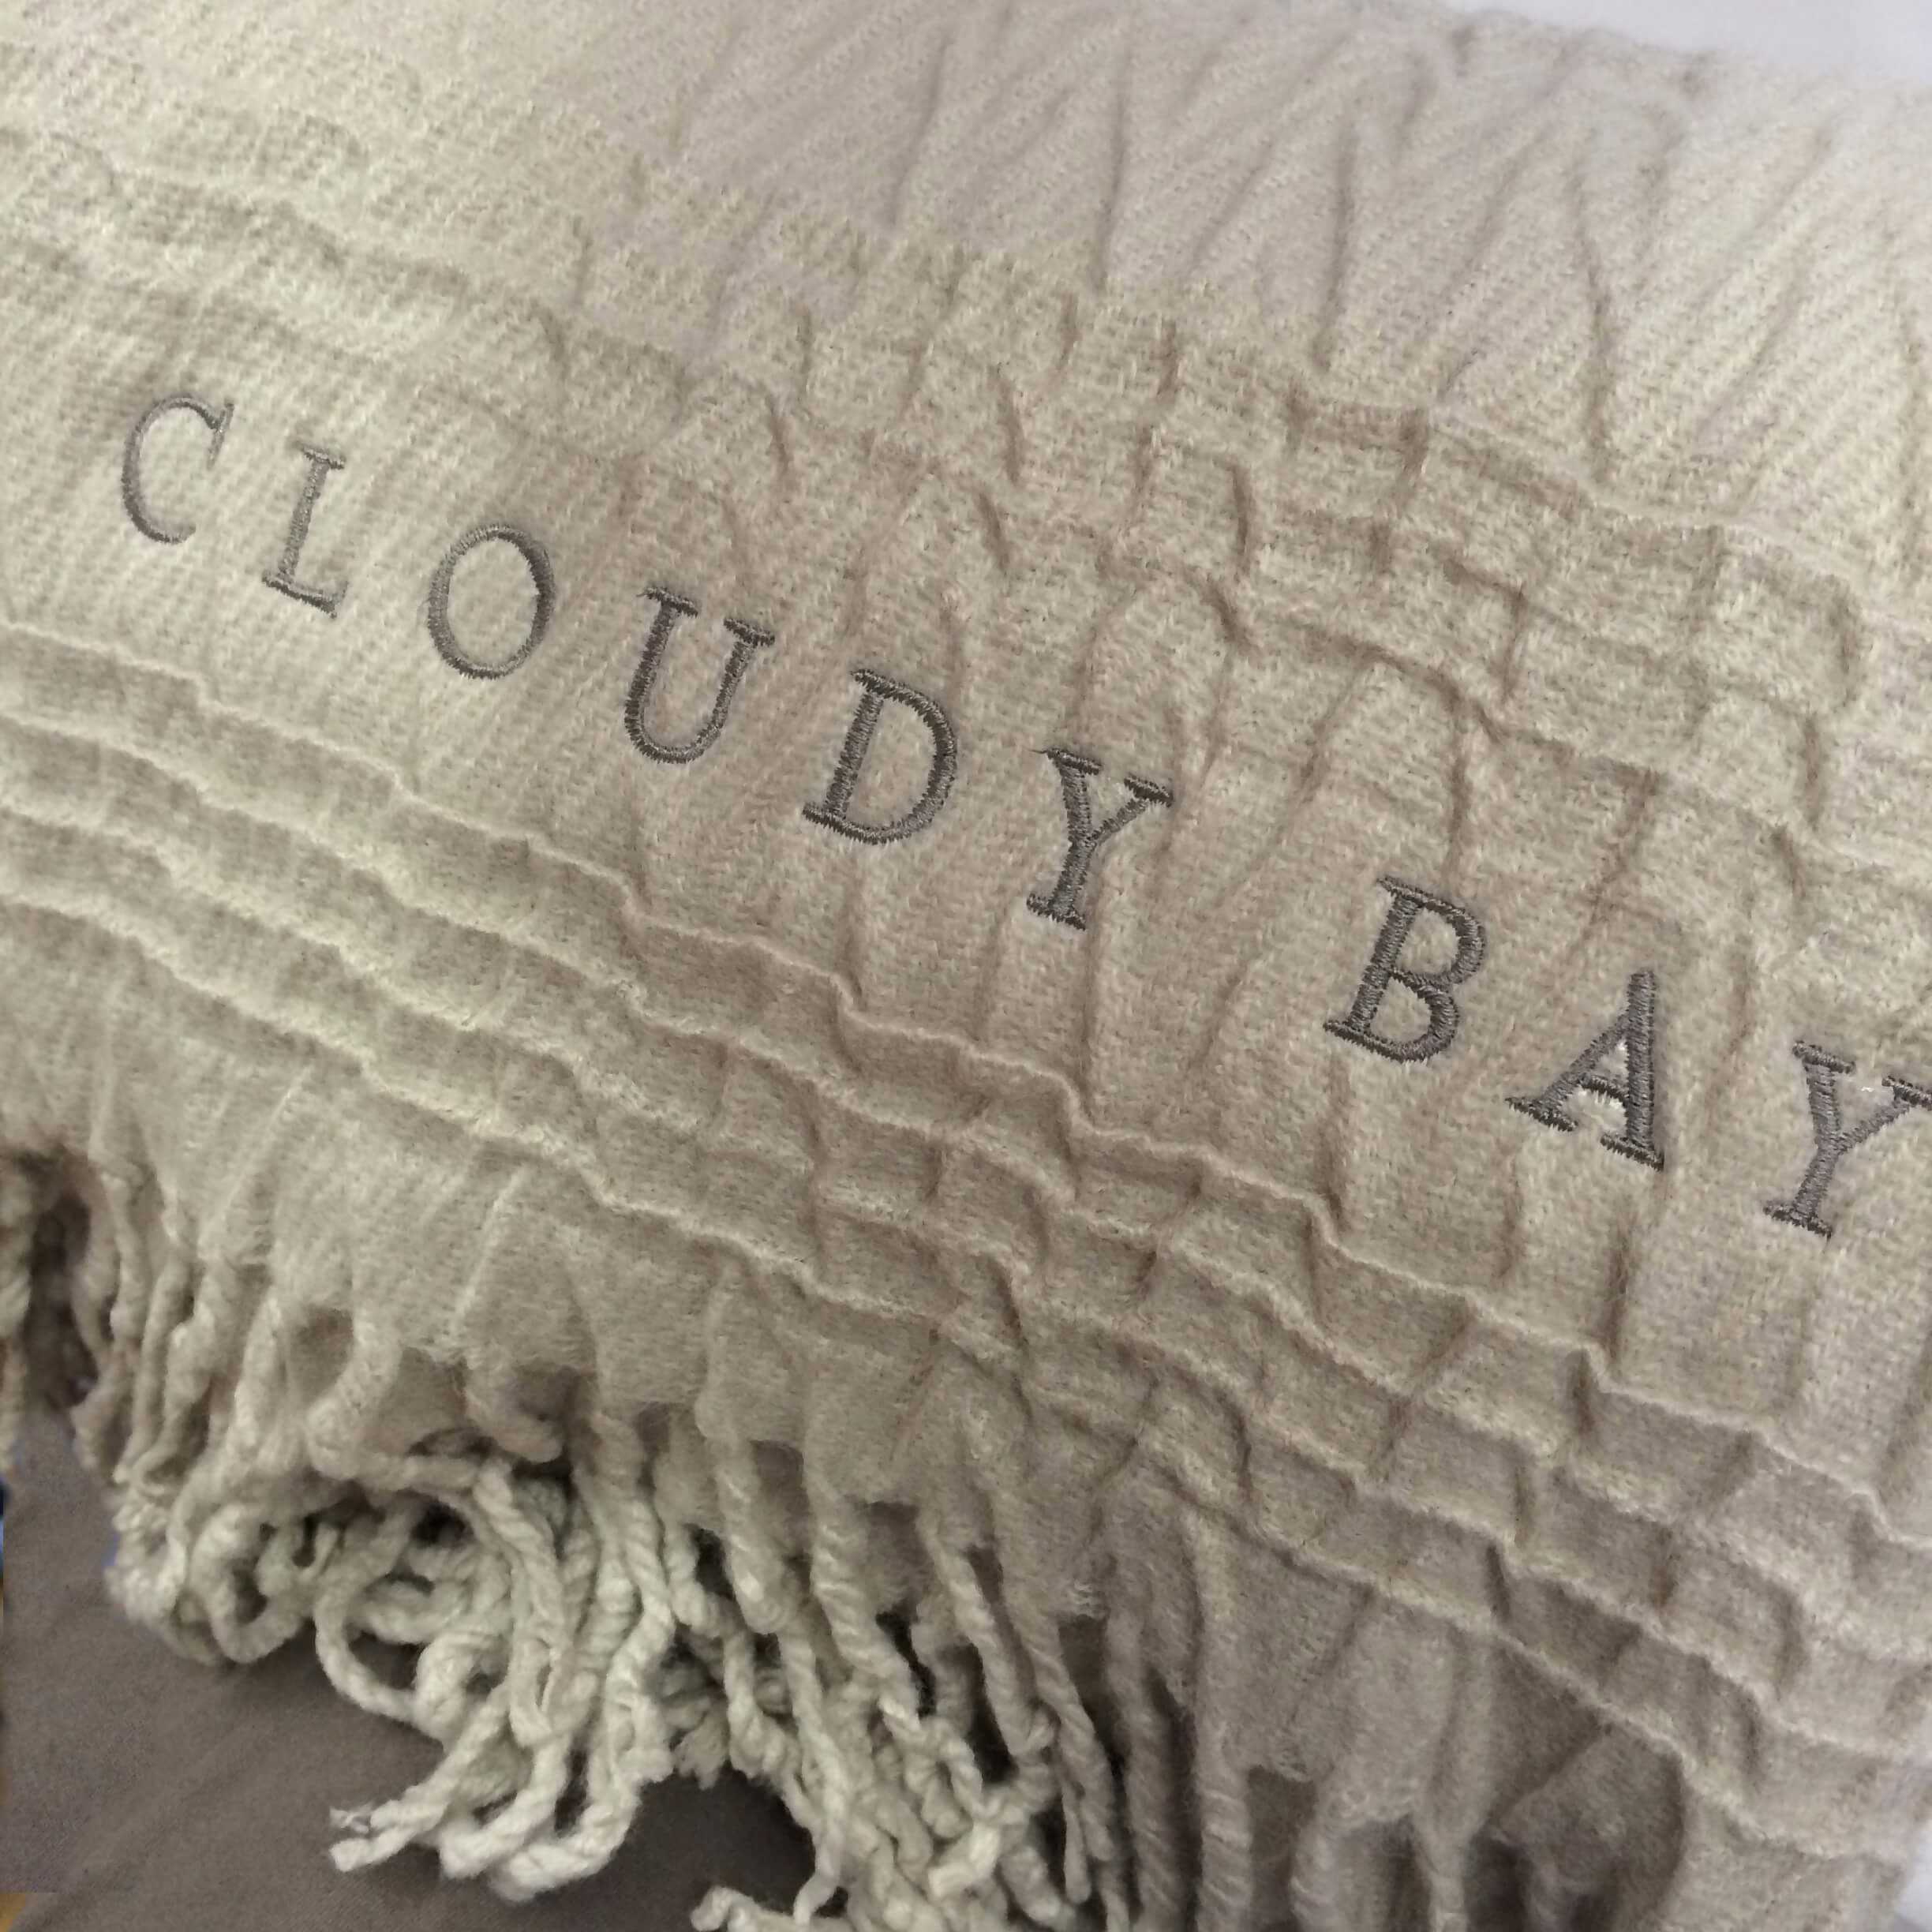 Cloudy bay branding application